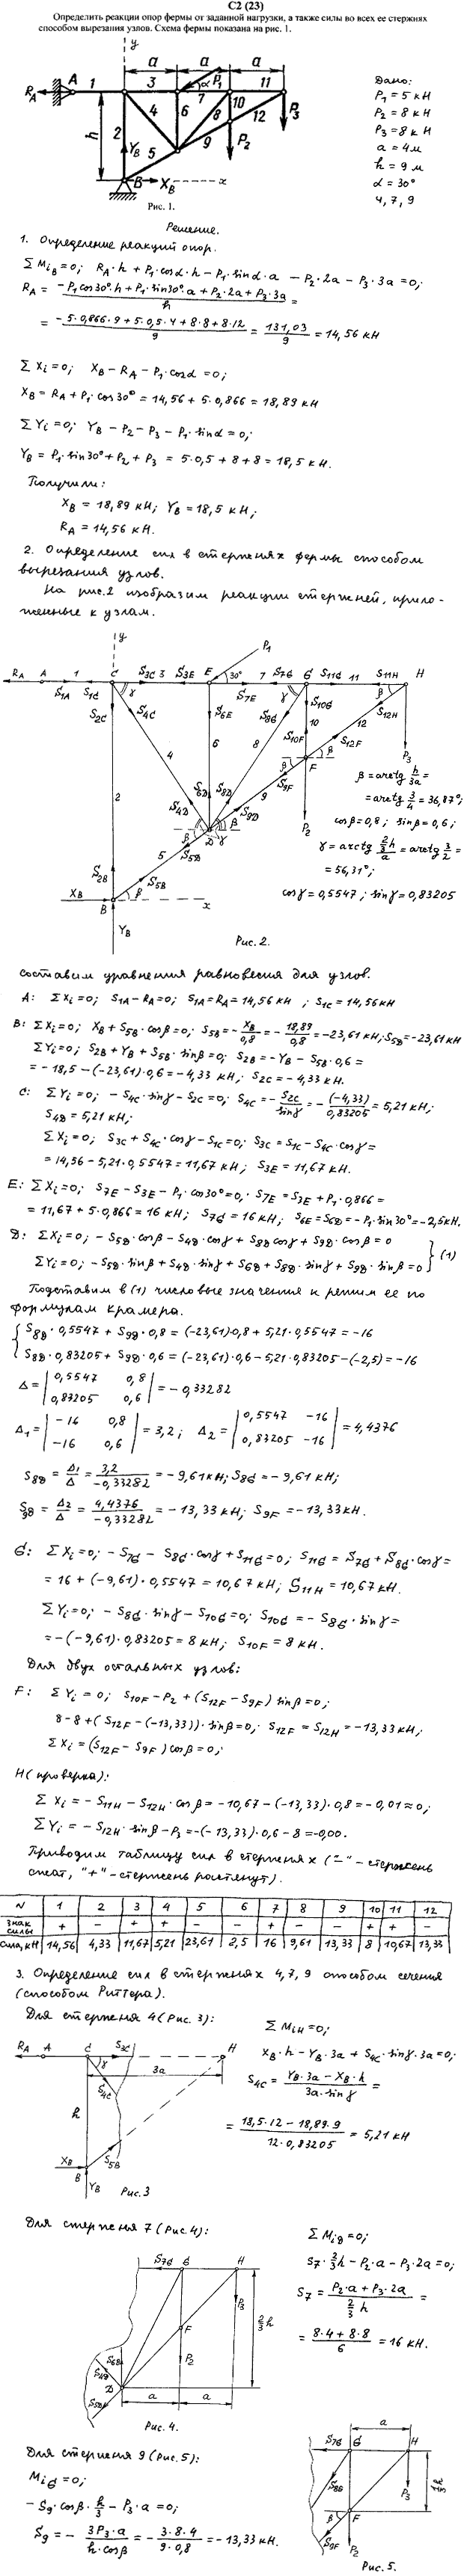 Задание C2 вариант 23. P1=5 кН, P2=8 кН, P3=8 кН, a=4 м, h=9 м, α=30 град, номер стержня 4, 7, 9.